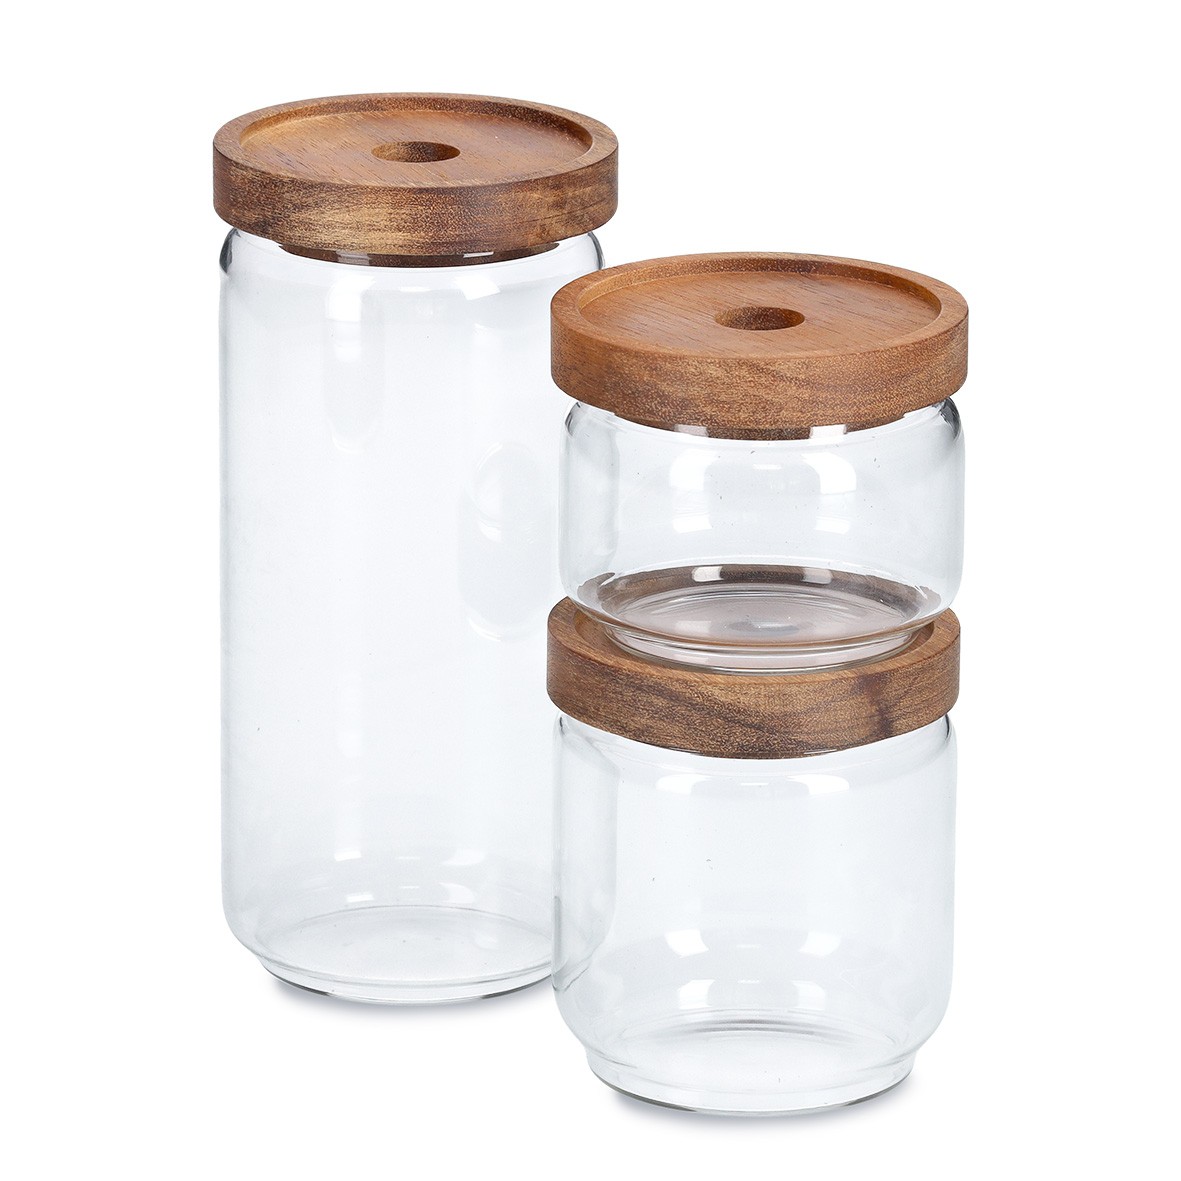 Zeller Vorratsglas m- Akaziendeckel, 950 ml, Borosilikat Glas / Holz /  Silikon, transparent, ca. Ø 9 x 19,7 cm jetzt kaufen bei